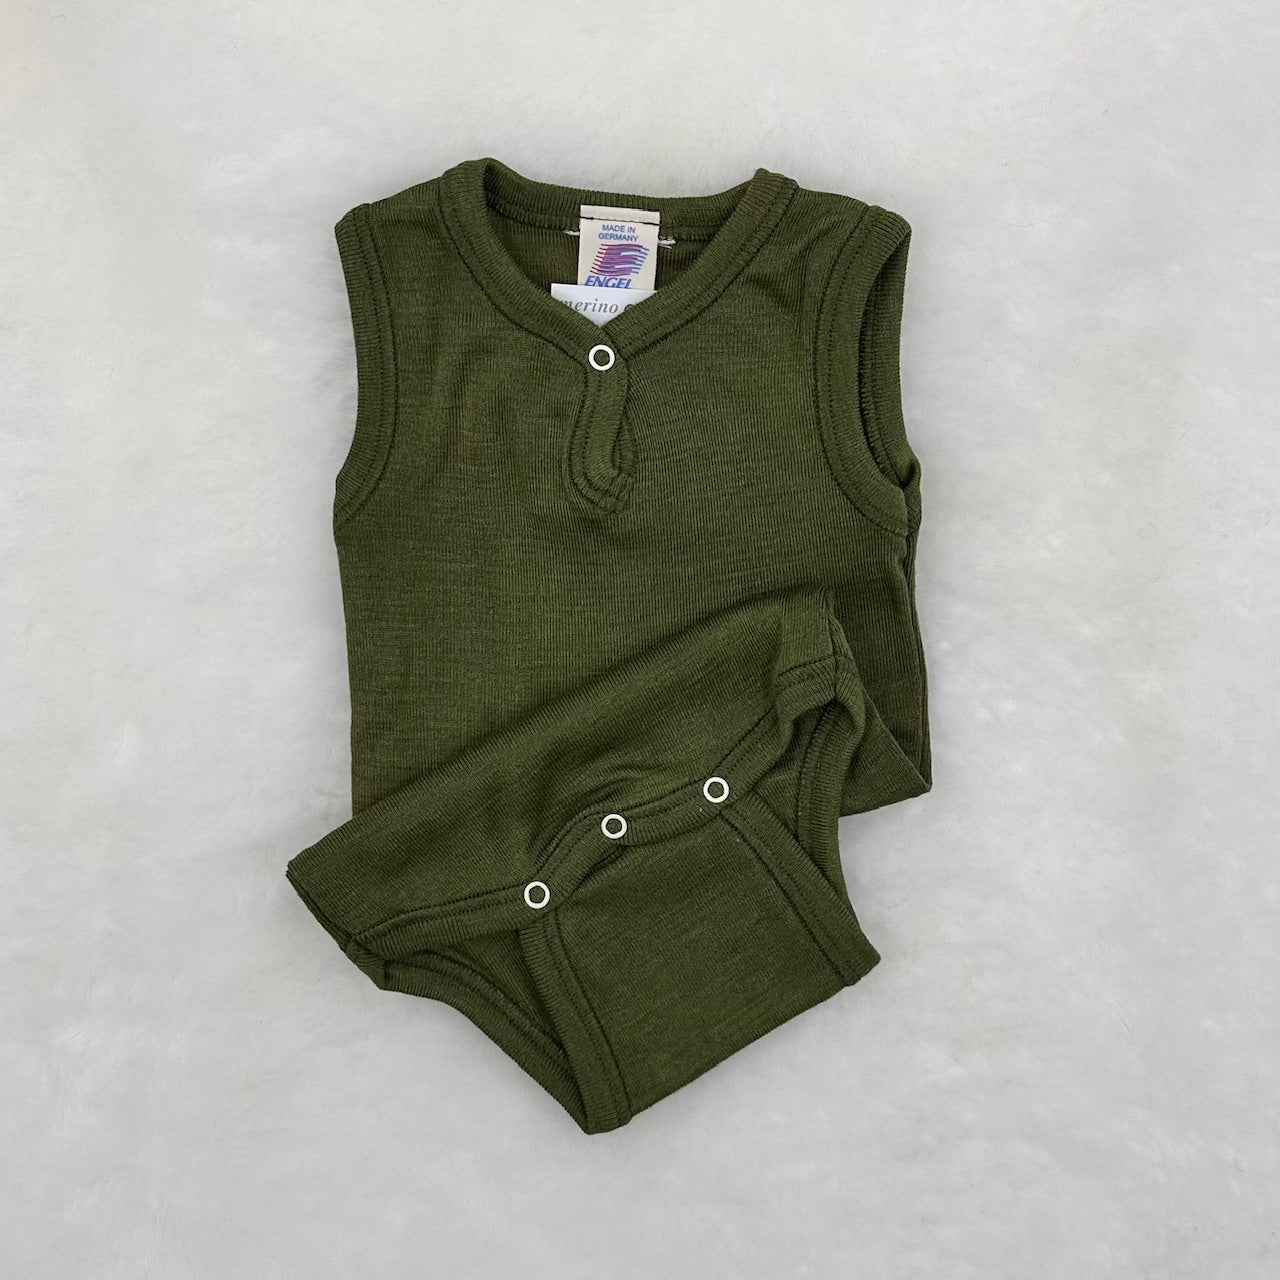 ENGEL Sleeveless Snap-Bottom Romper in Organic Wool/Silk for Baby/Toddler - color MOSS